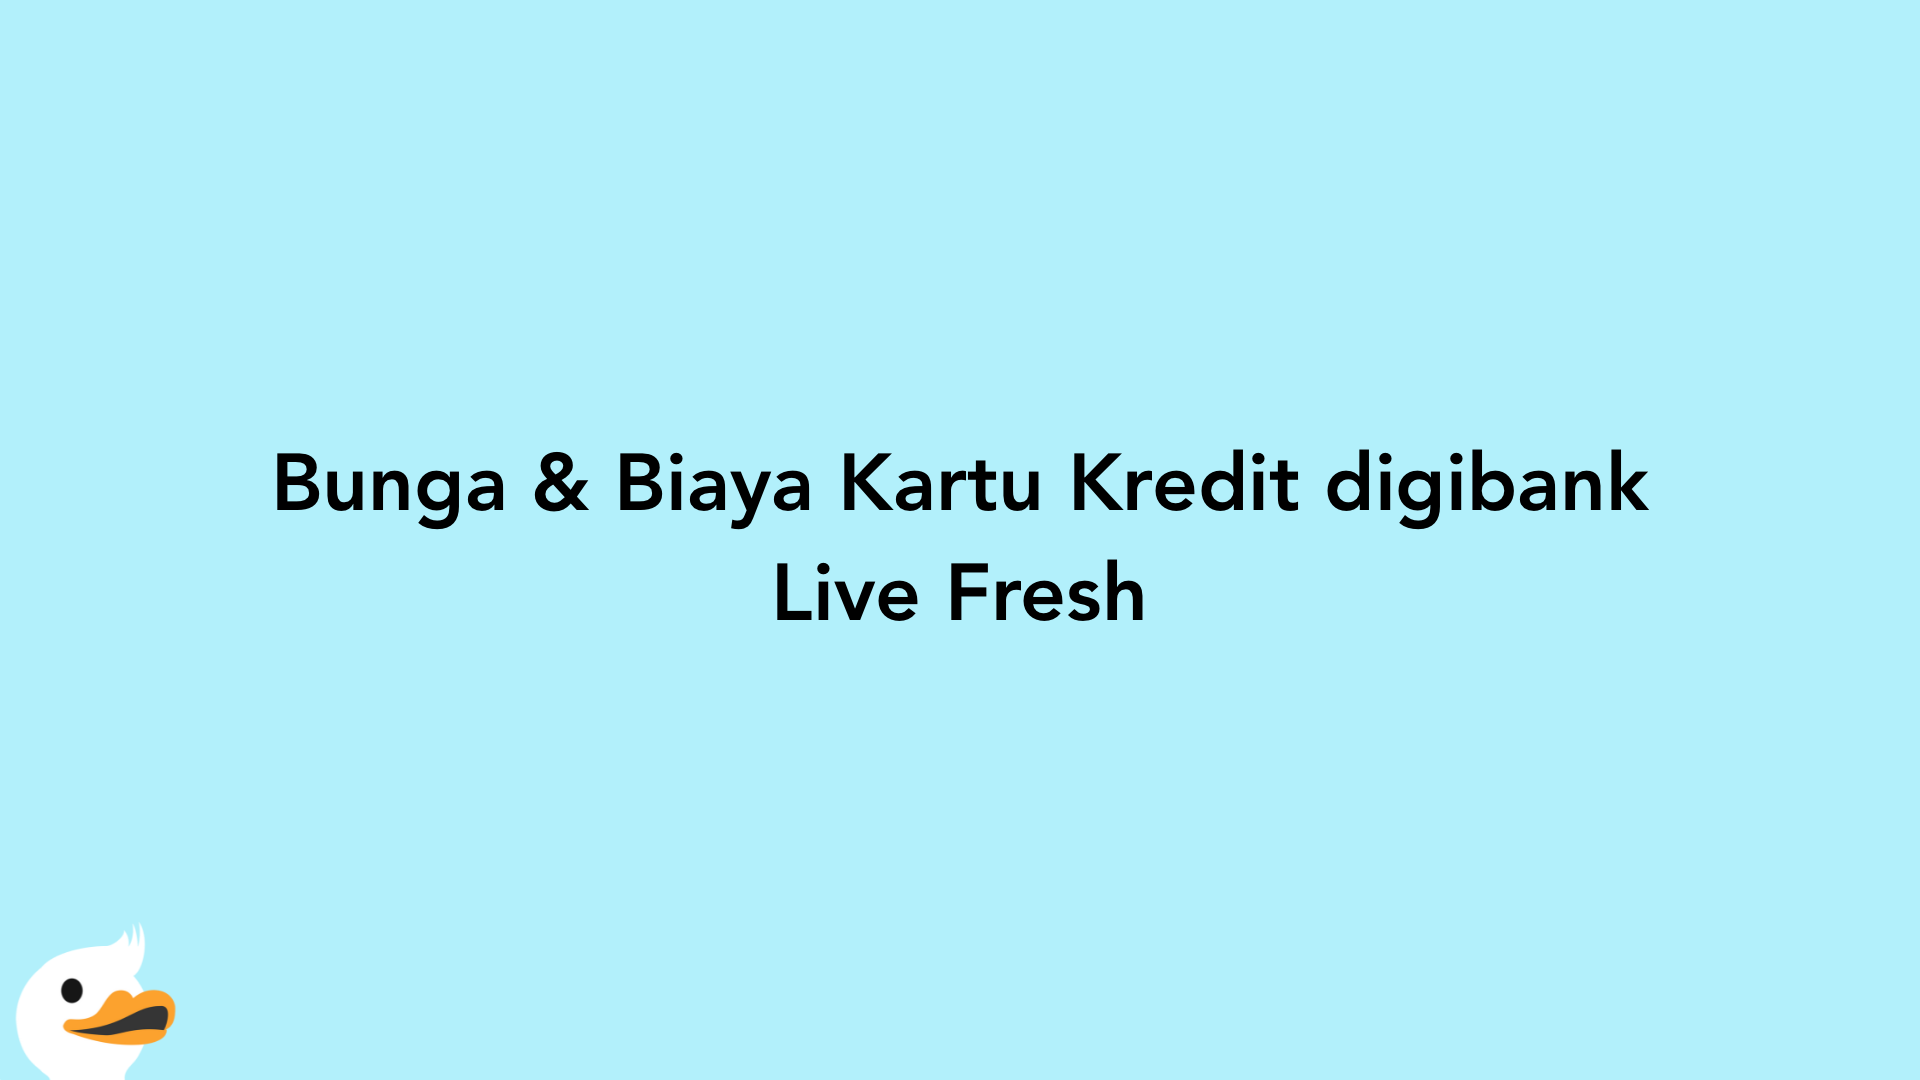 Bunga & Biaya Kartu Kredit digibank Live Fresh